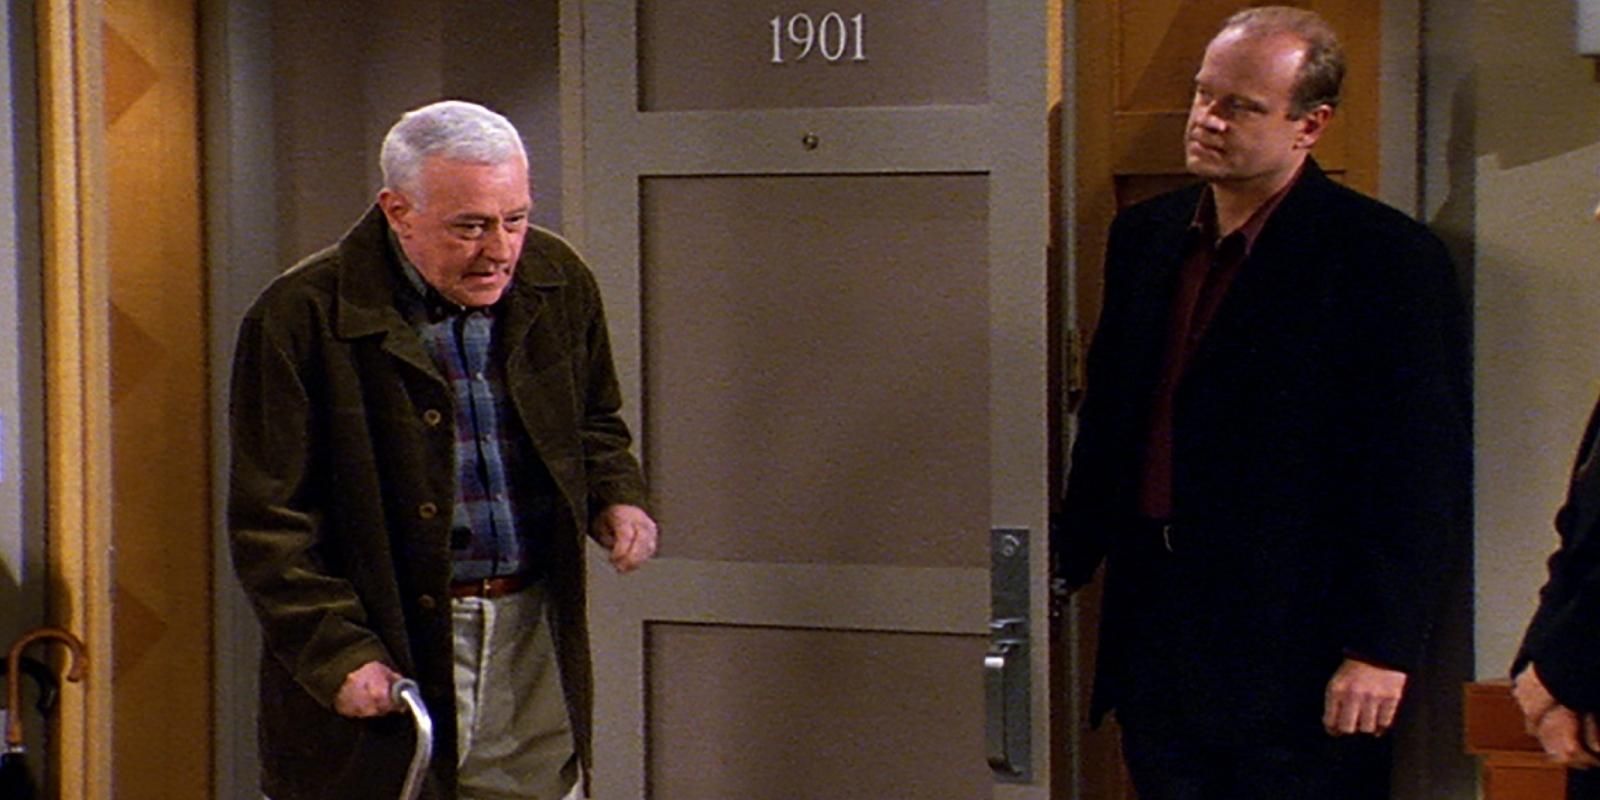 Martin Crane and Frasier Crane in The Apparent Trap episode of Frasier